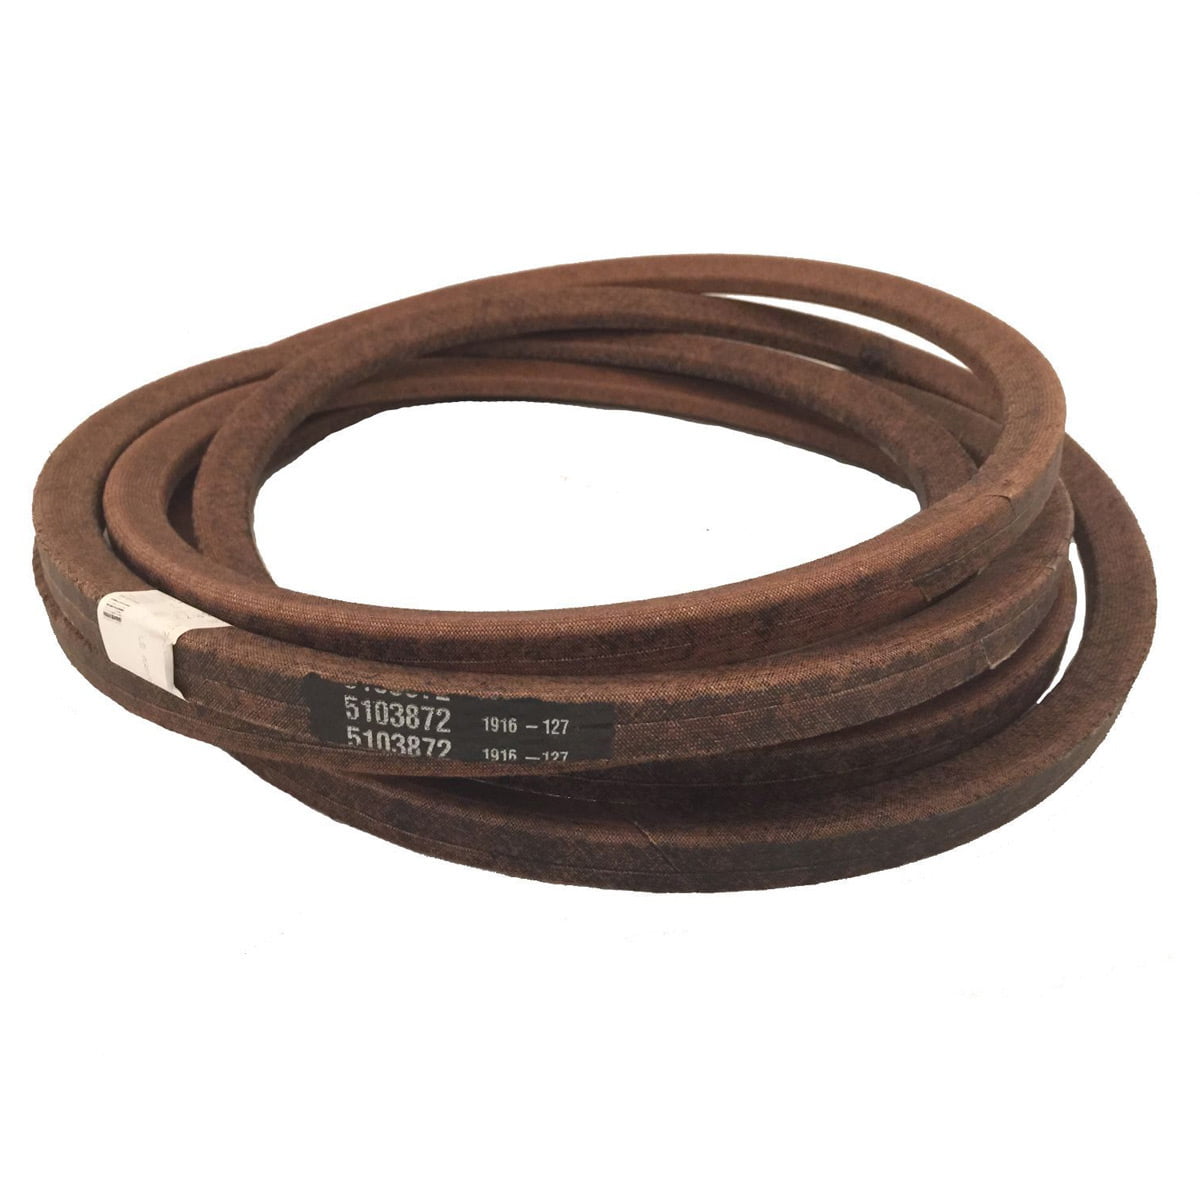 Exact Fit Belt For Ferris Snapper Simplicity Transmission Drive Belt 5104378 